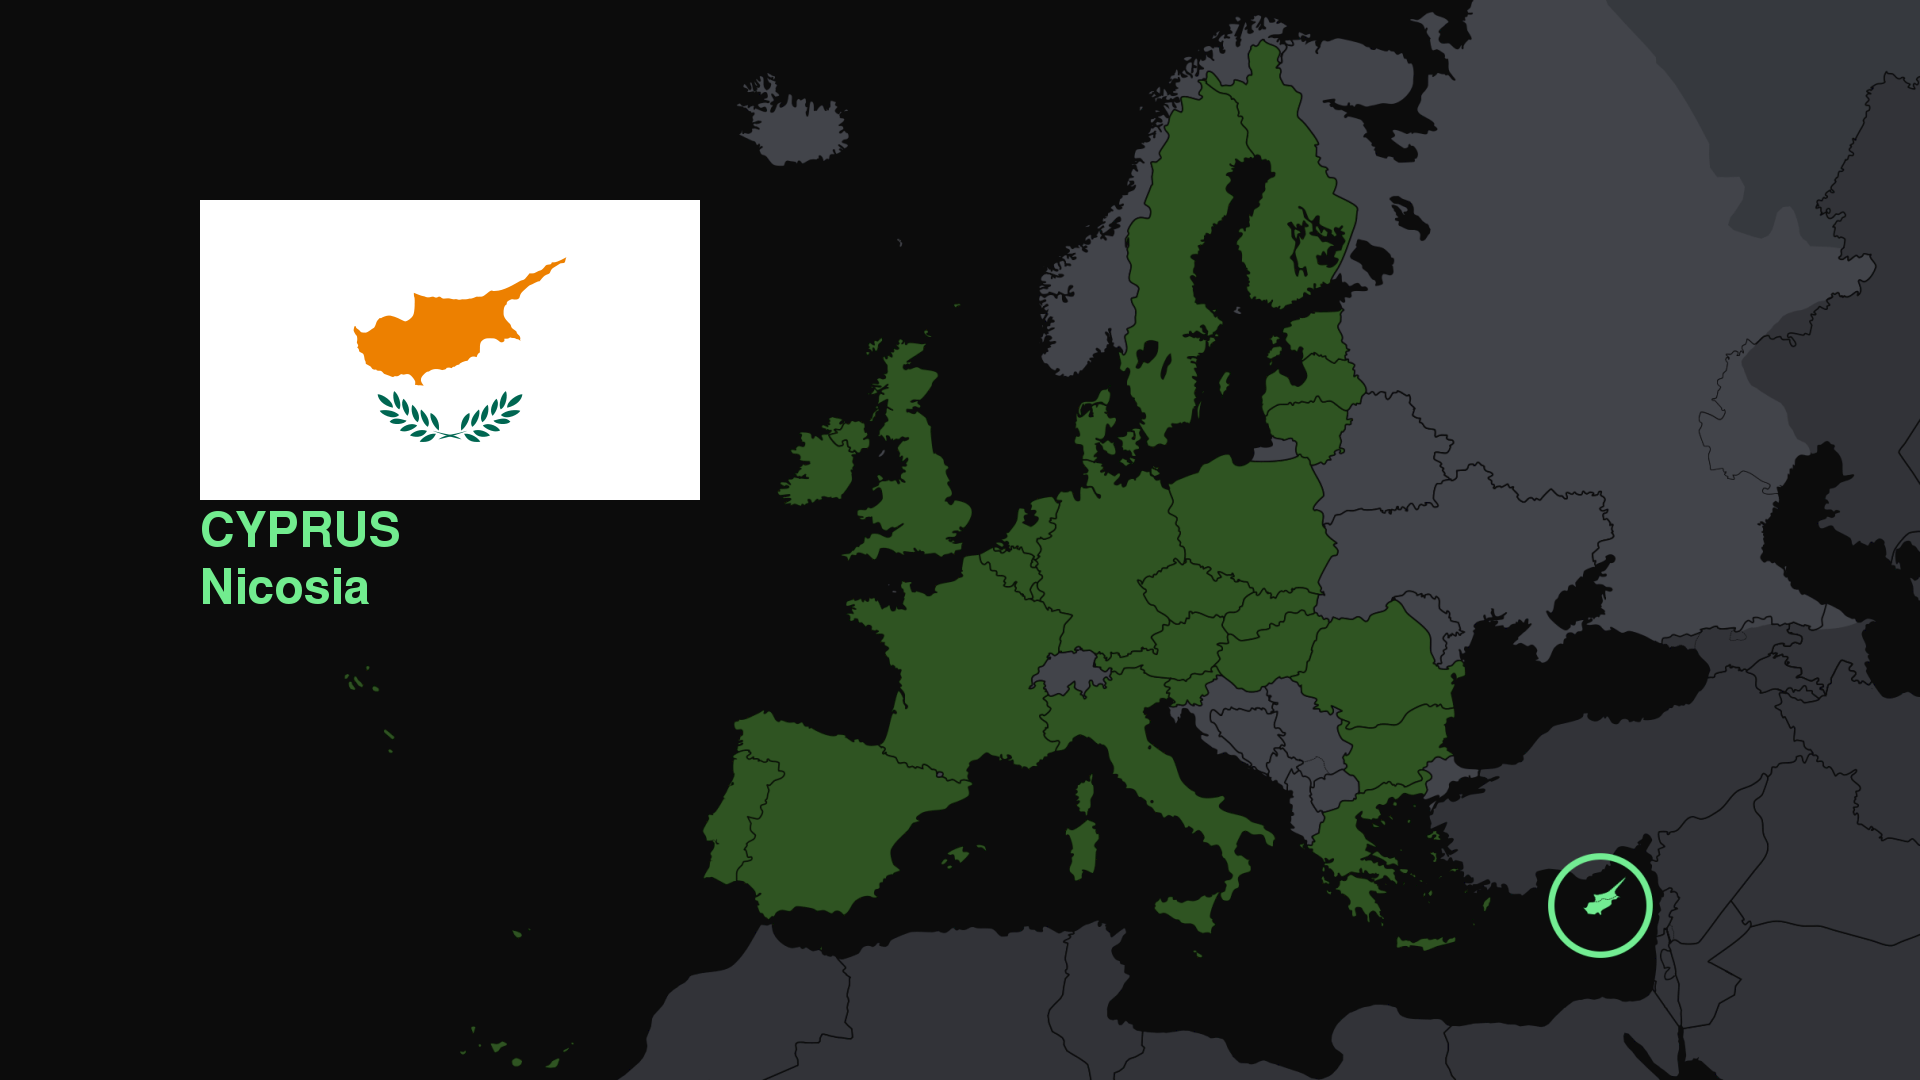 Тест европа в мире. Тест на знание карты Европы. Карта Европы с флагами. Тест на знание стран Европы. Карта Европы в зеленом цвете.